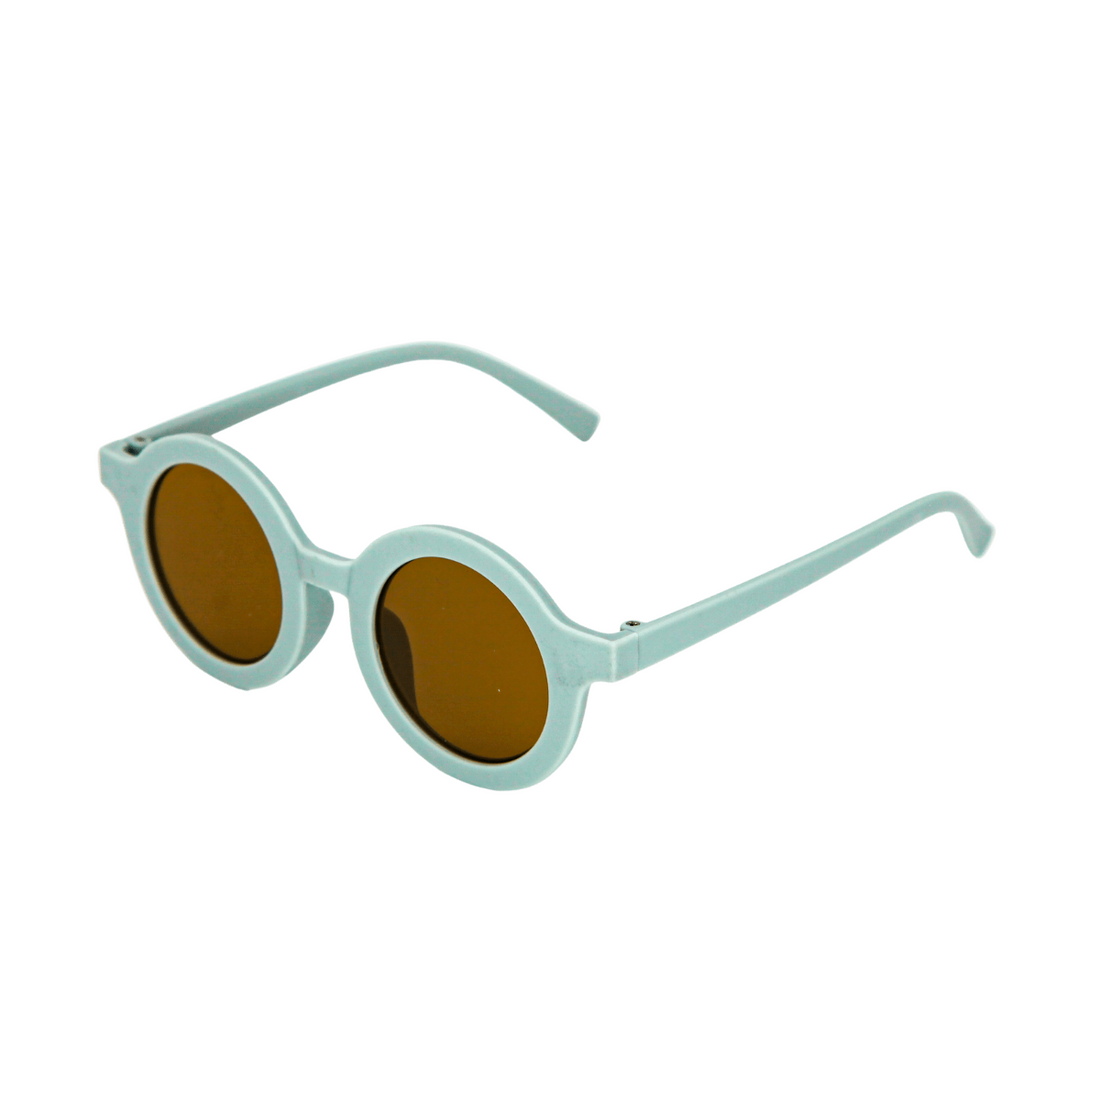 Jetsetters Sunglasses - Unisex - Blue (3-6 Years)